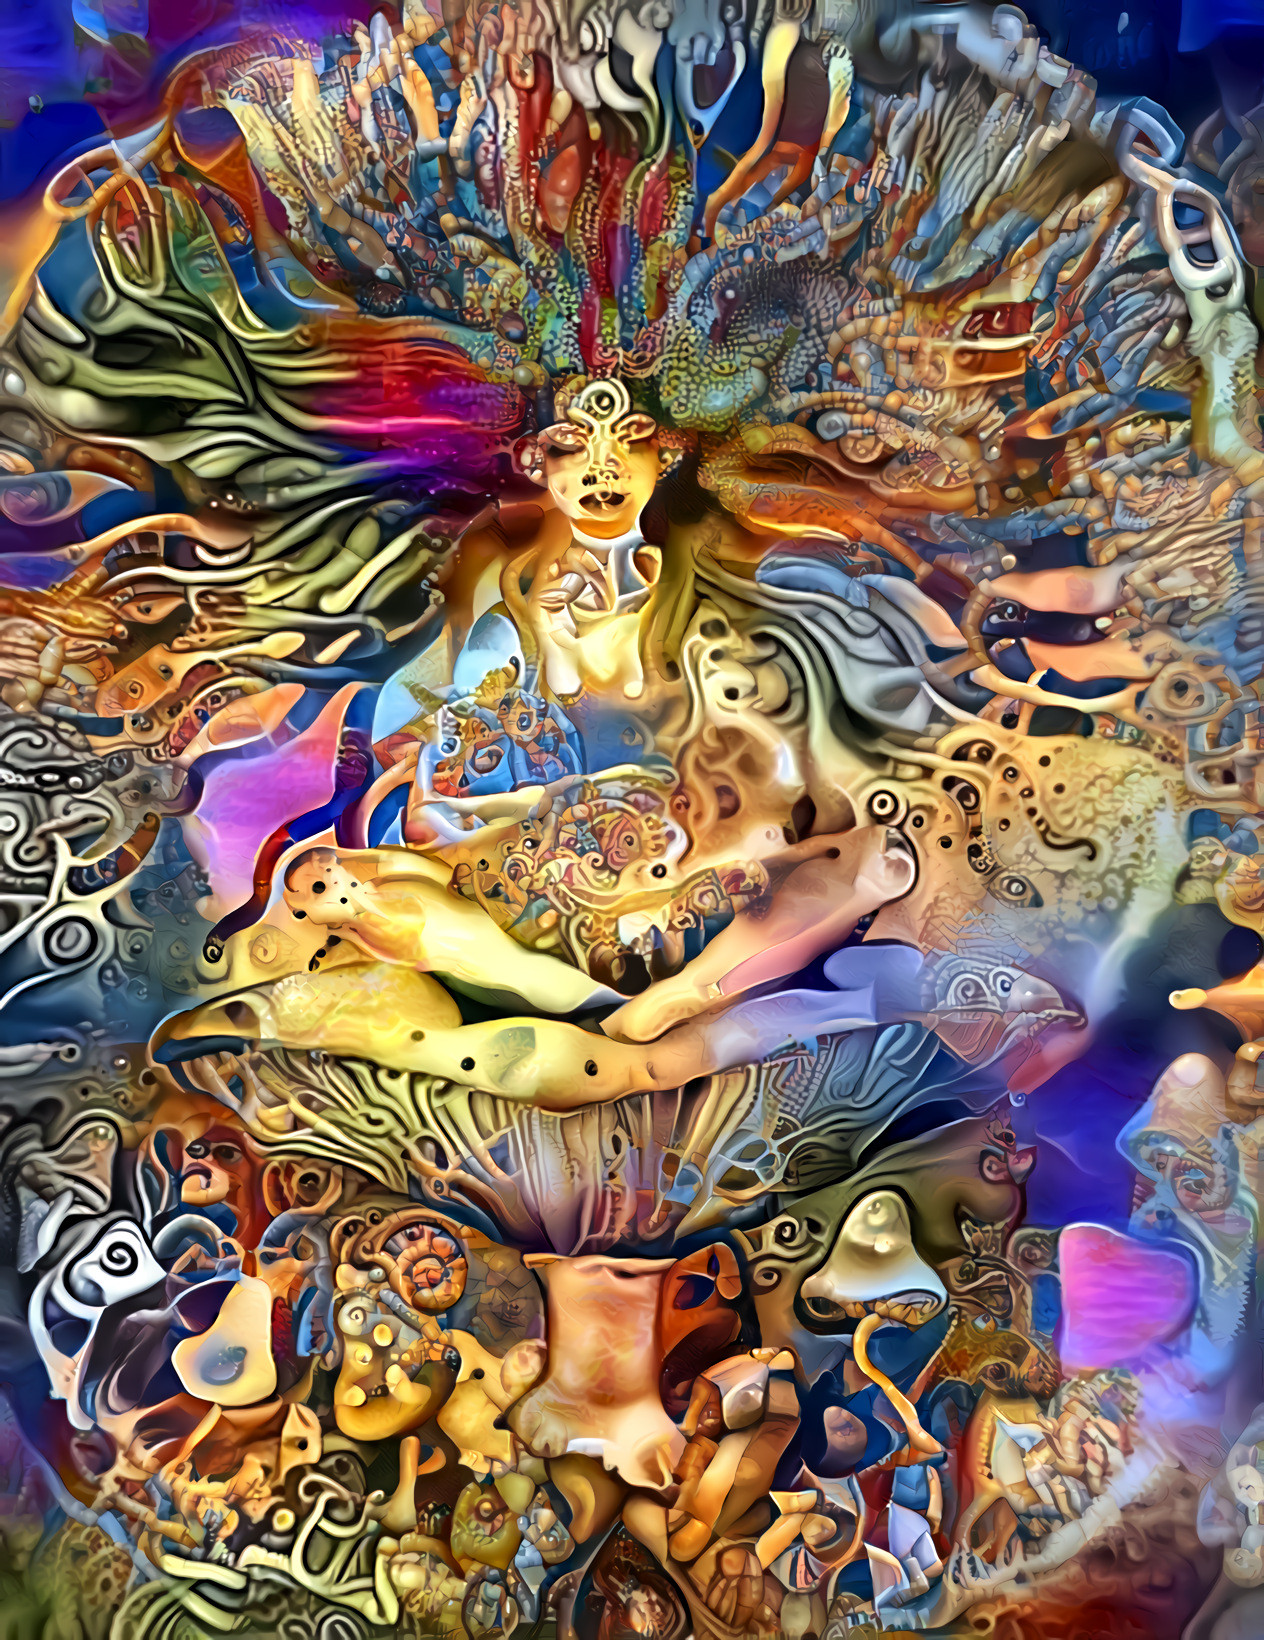 Psychedelic Meditative minds